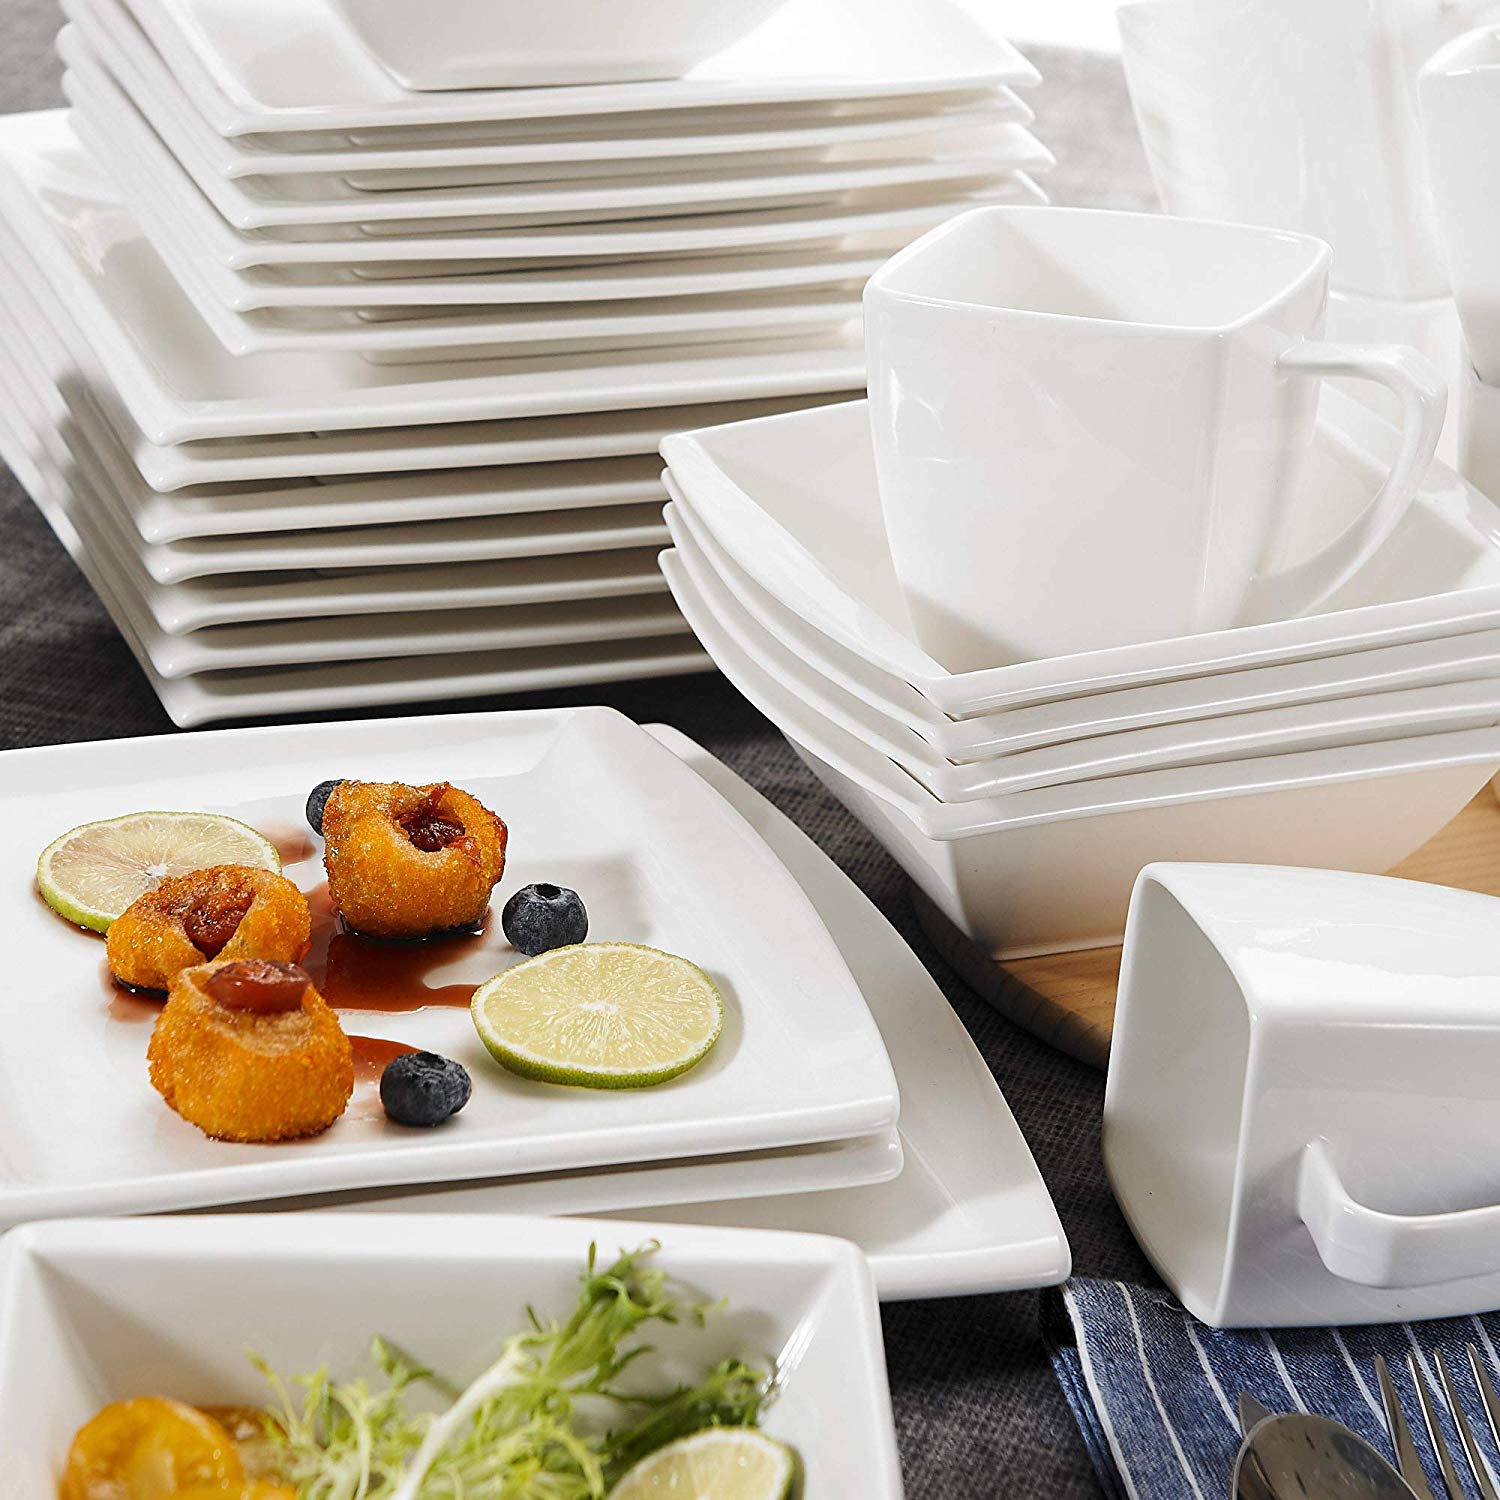 MALACASA 50-Piece White Porcelain Dinnerware in the Dinnerware